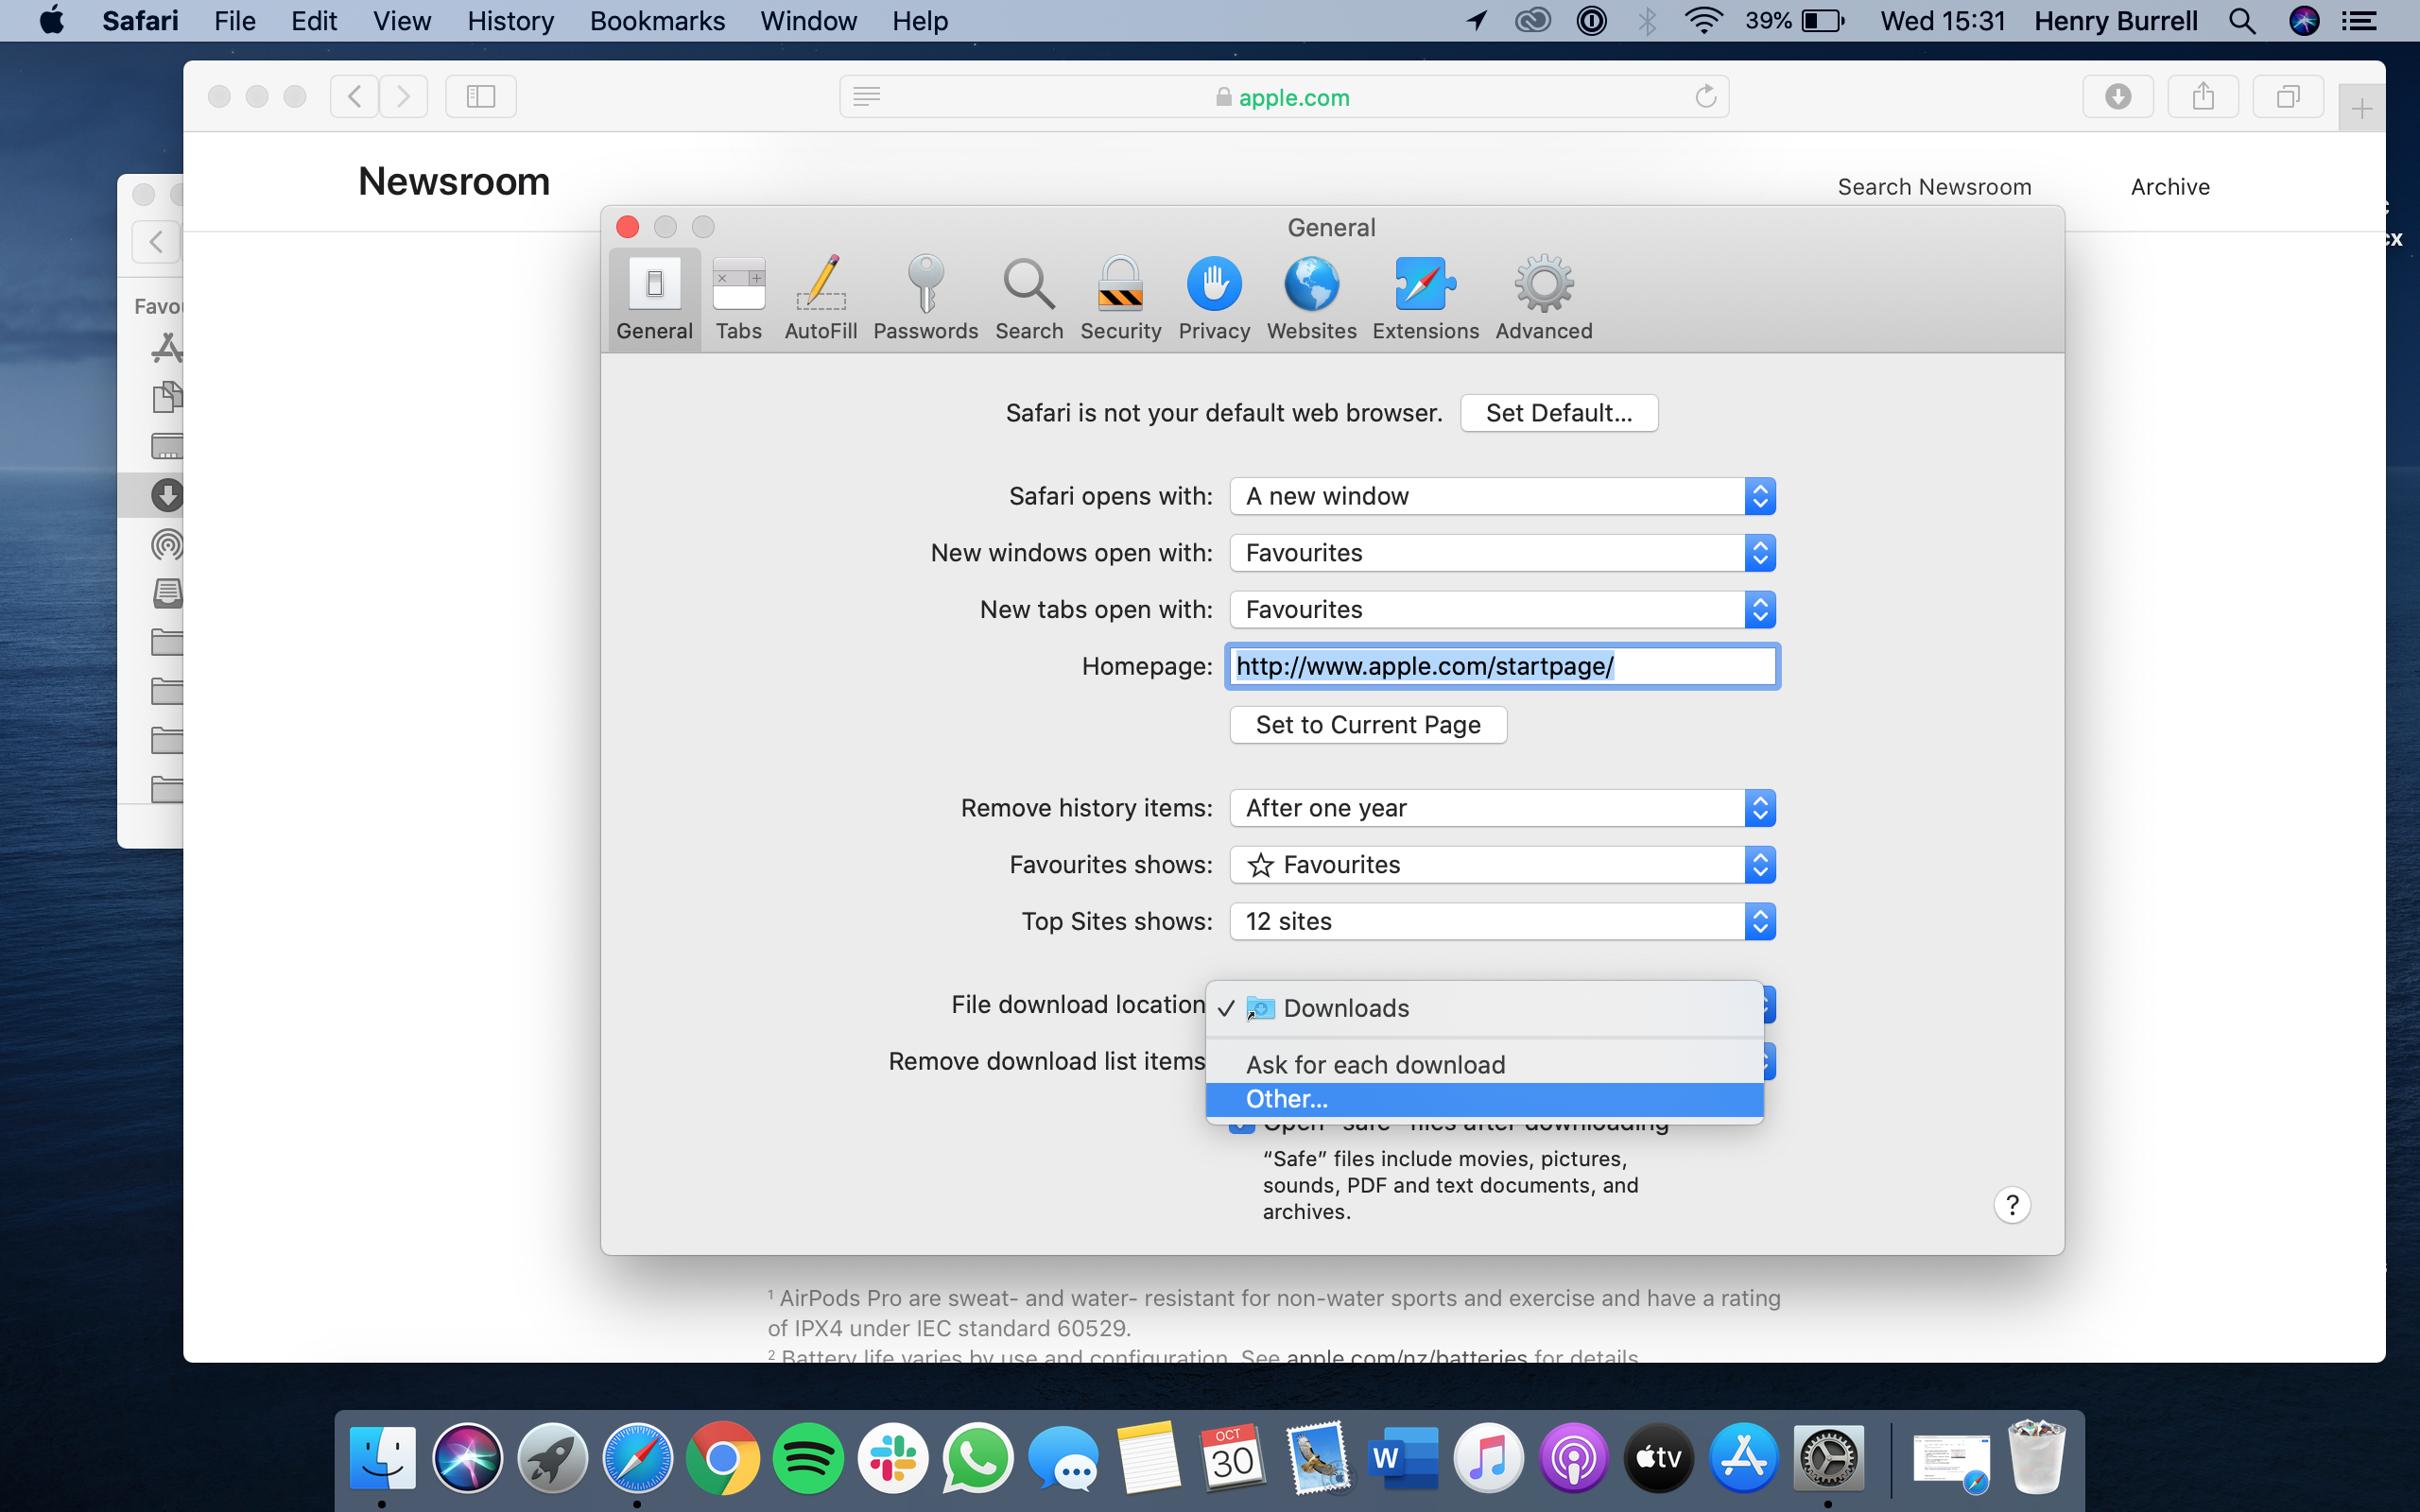 upgrade safari for mac 10.6.8